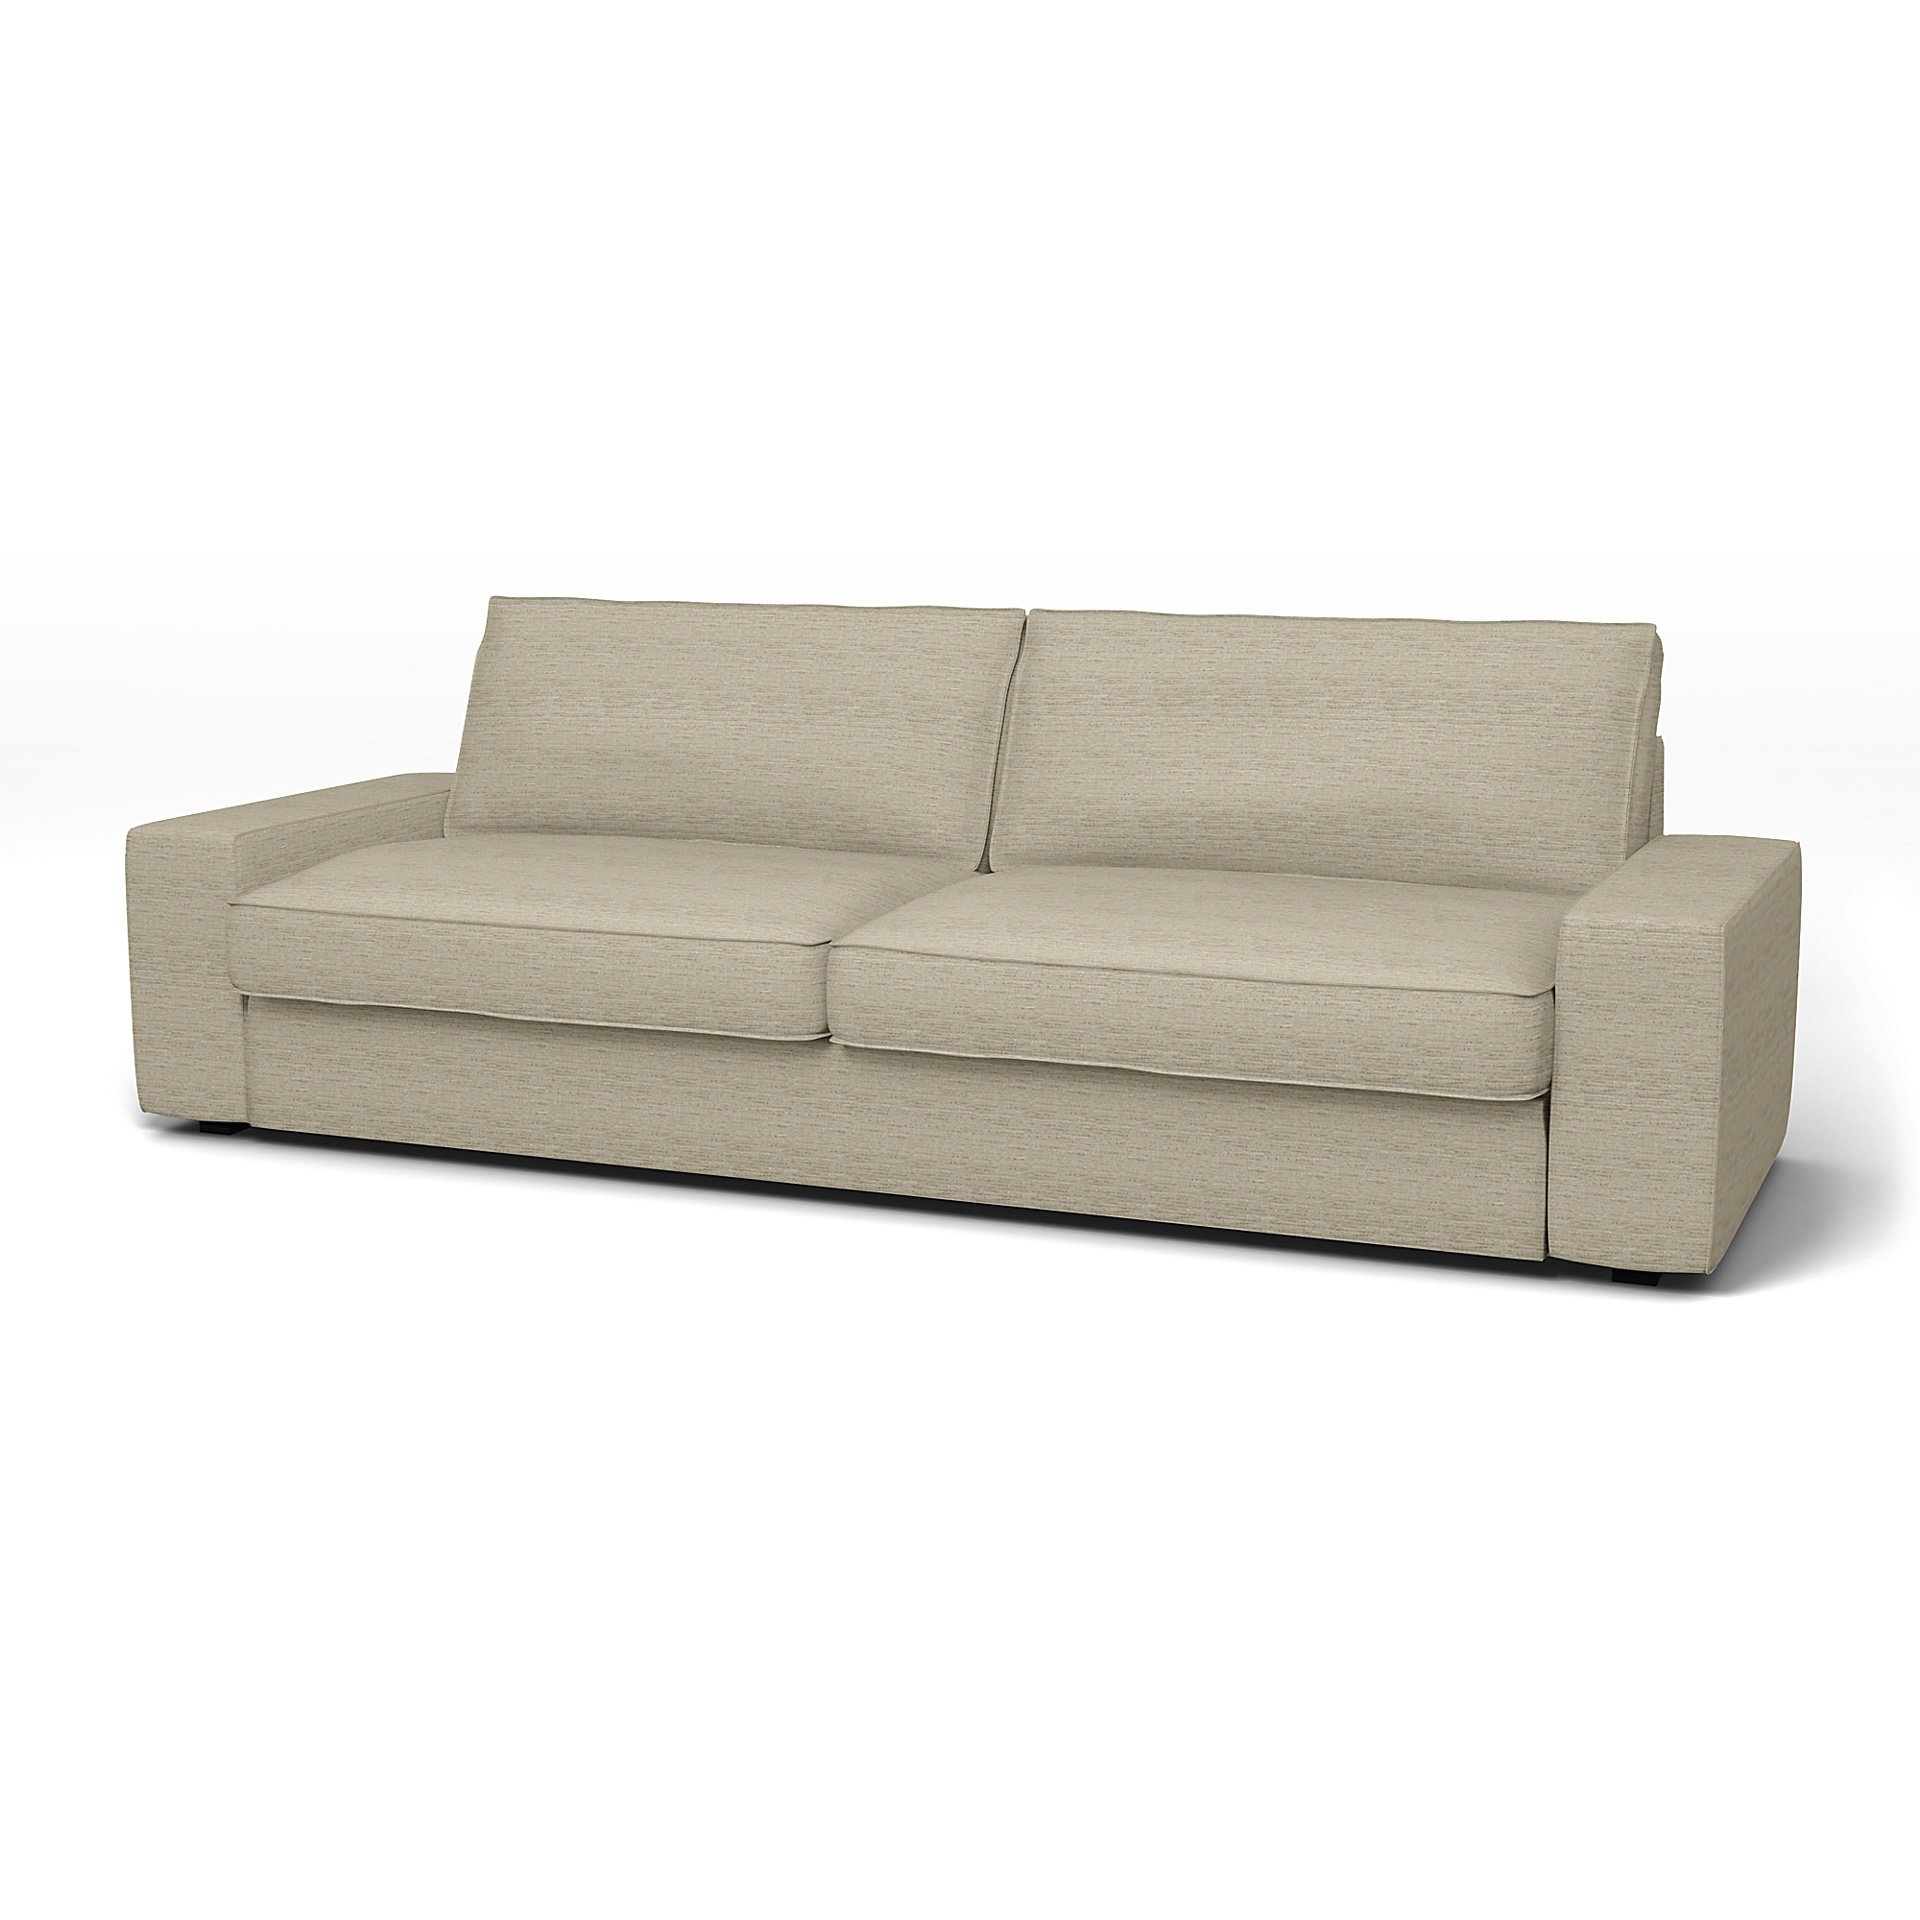 IKEA - Kivik Sofa Bed Cover, Light Sand, Boucle & Texture - Bemz